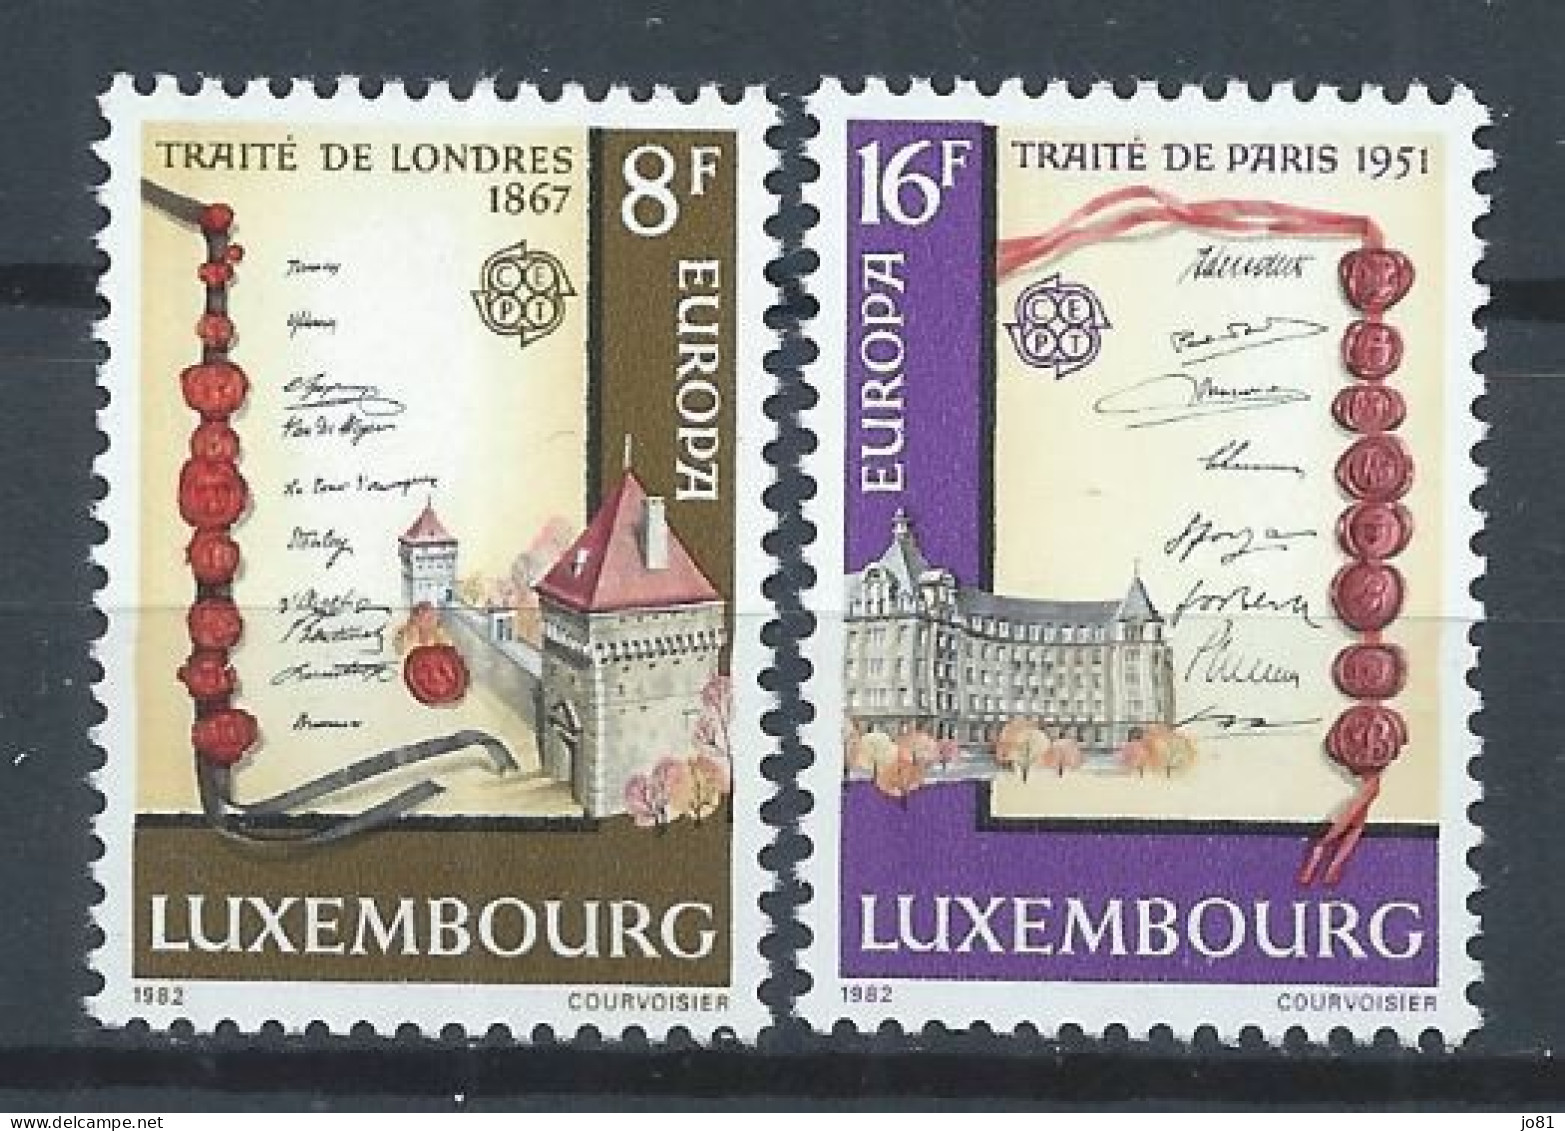 Luxembourg YT 1002-1003 Neuf Sans Charnière XX MNH Europa 1982 - Ungebraucht